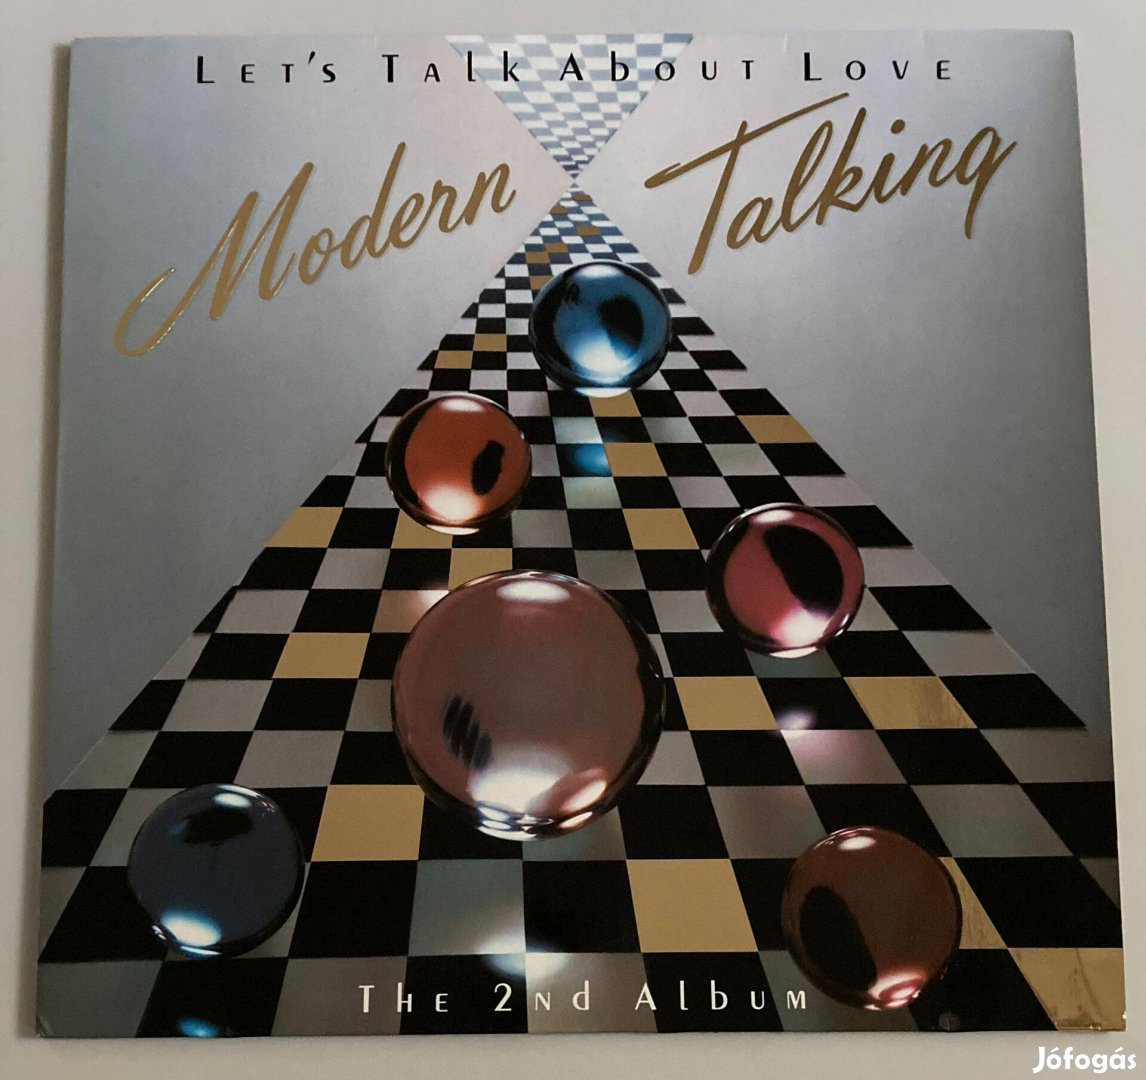 Modern Talking - Let's Talk About Love - The 2nd Album (német, 1985)